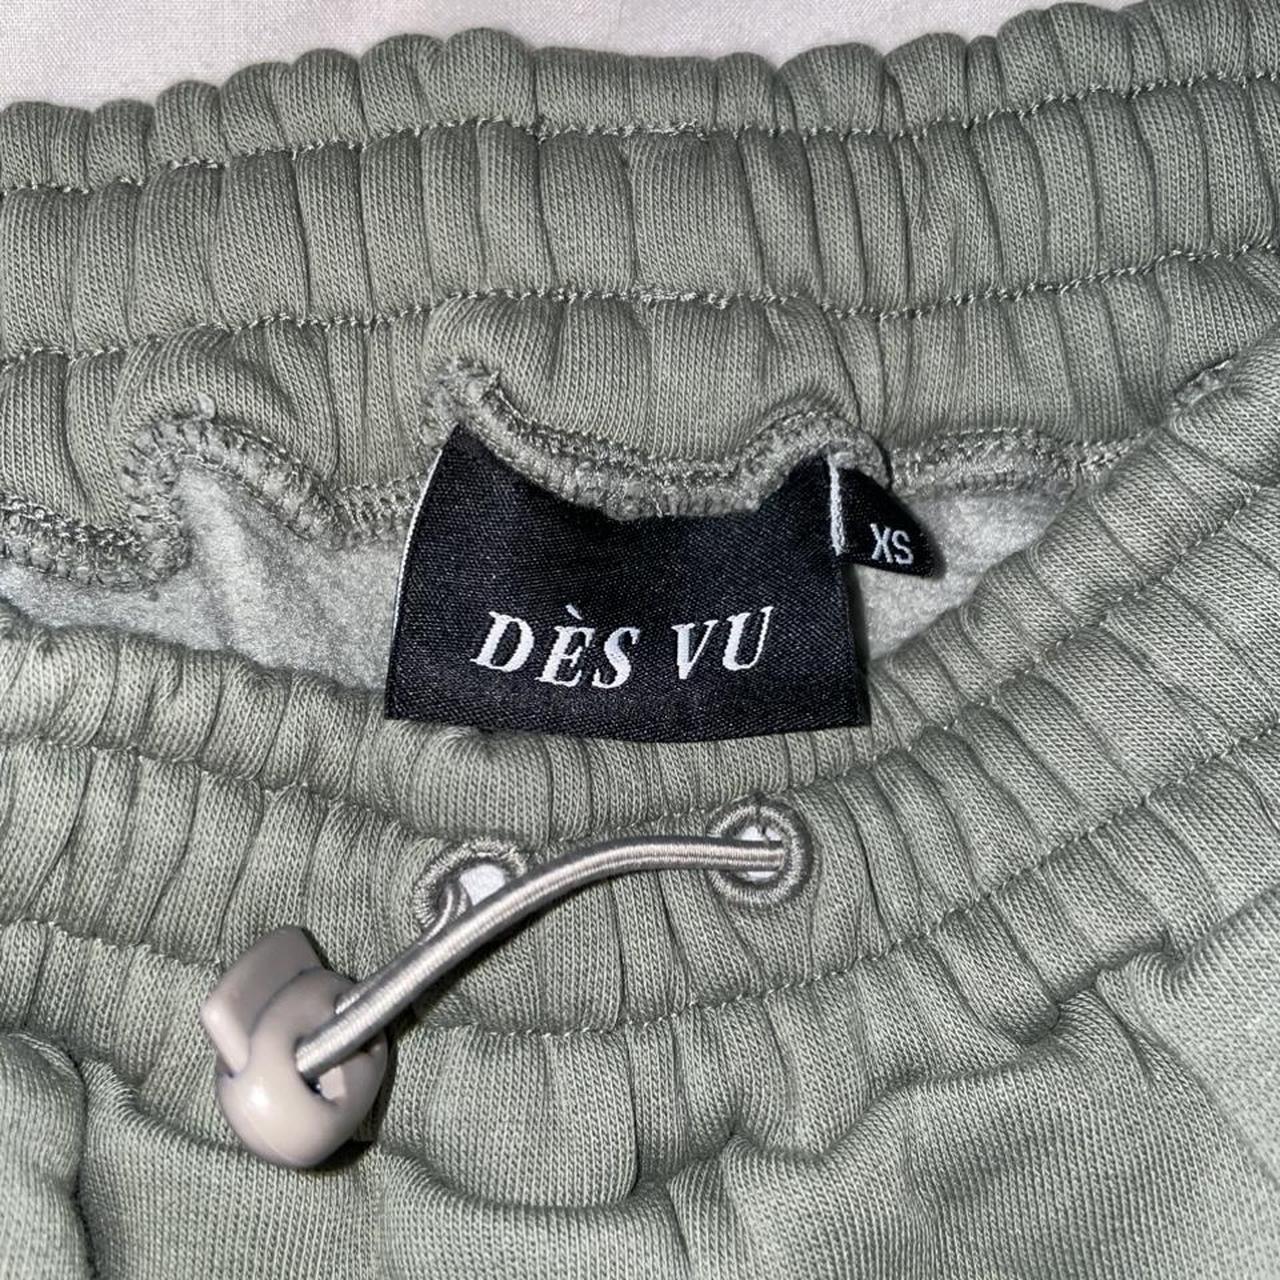 Custom LOUIS VUITTON sweatpants ✨ ALL SIZES ✨ - Depop